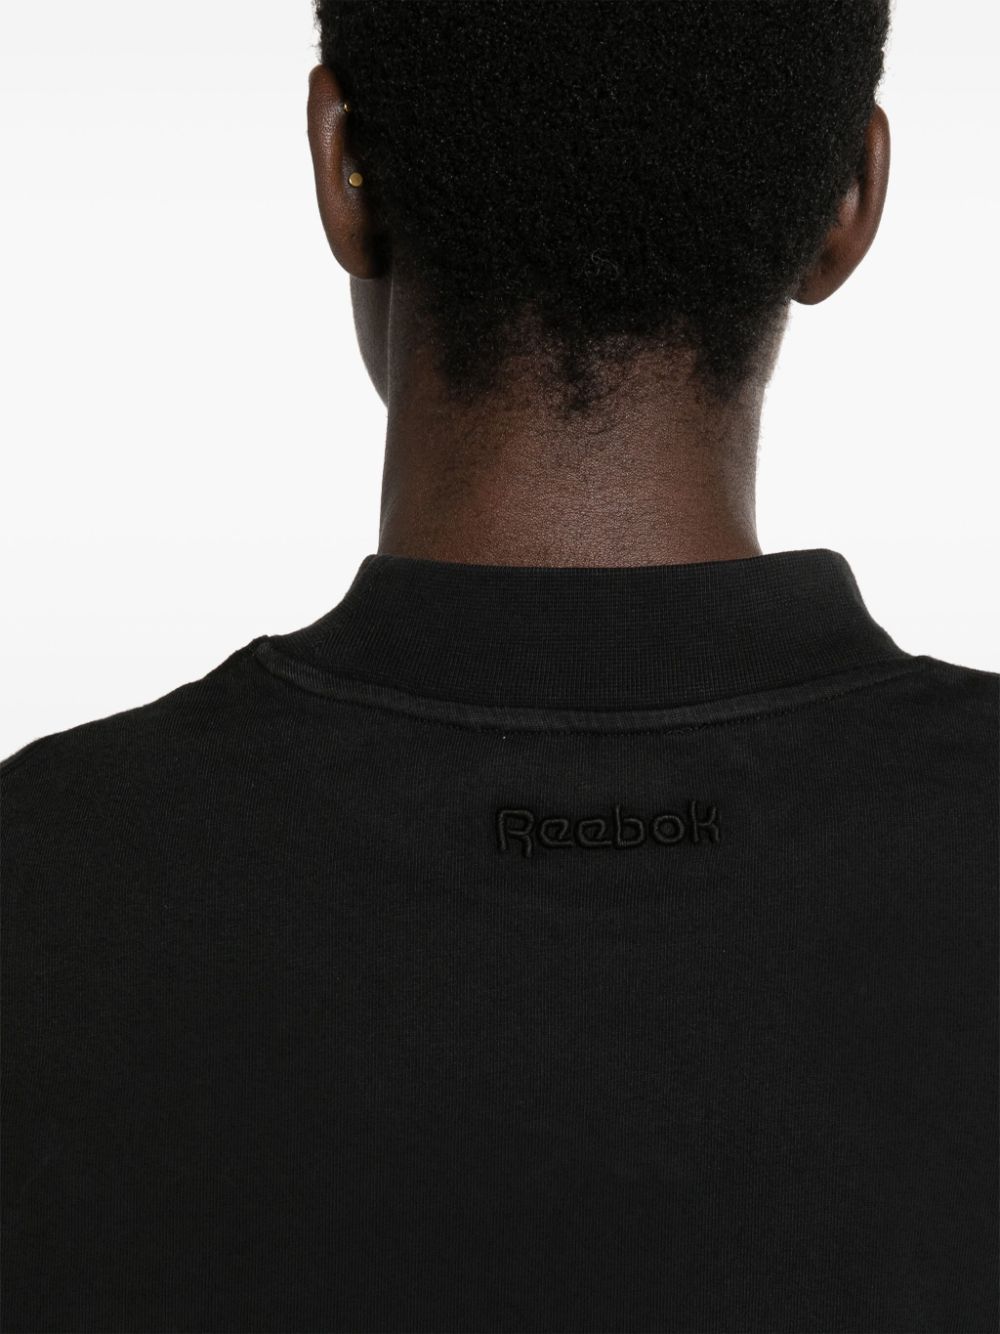 Reebok LTD Cropped T-shirt Zwart